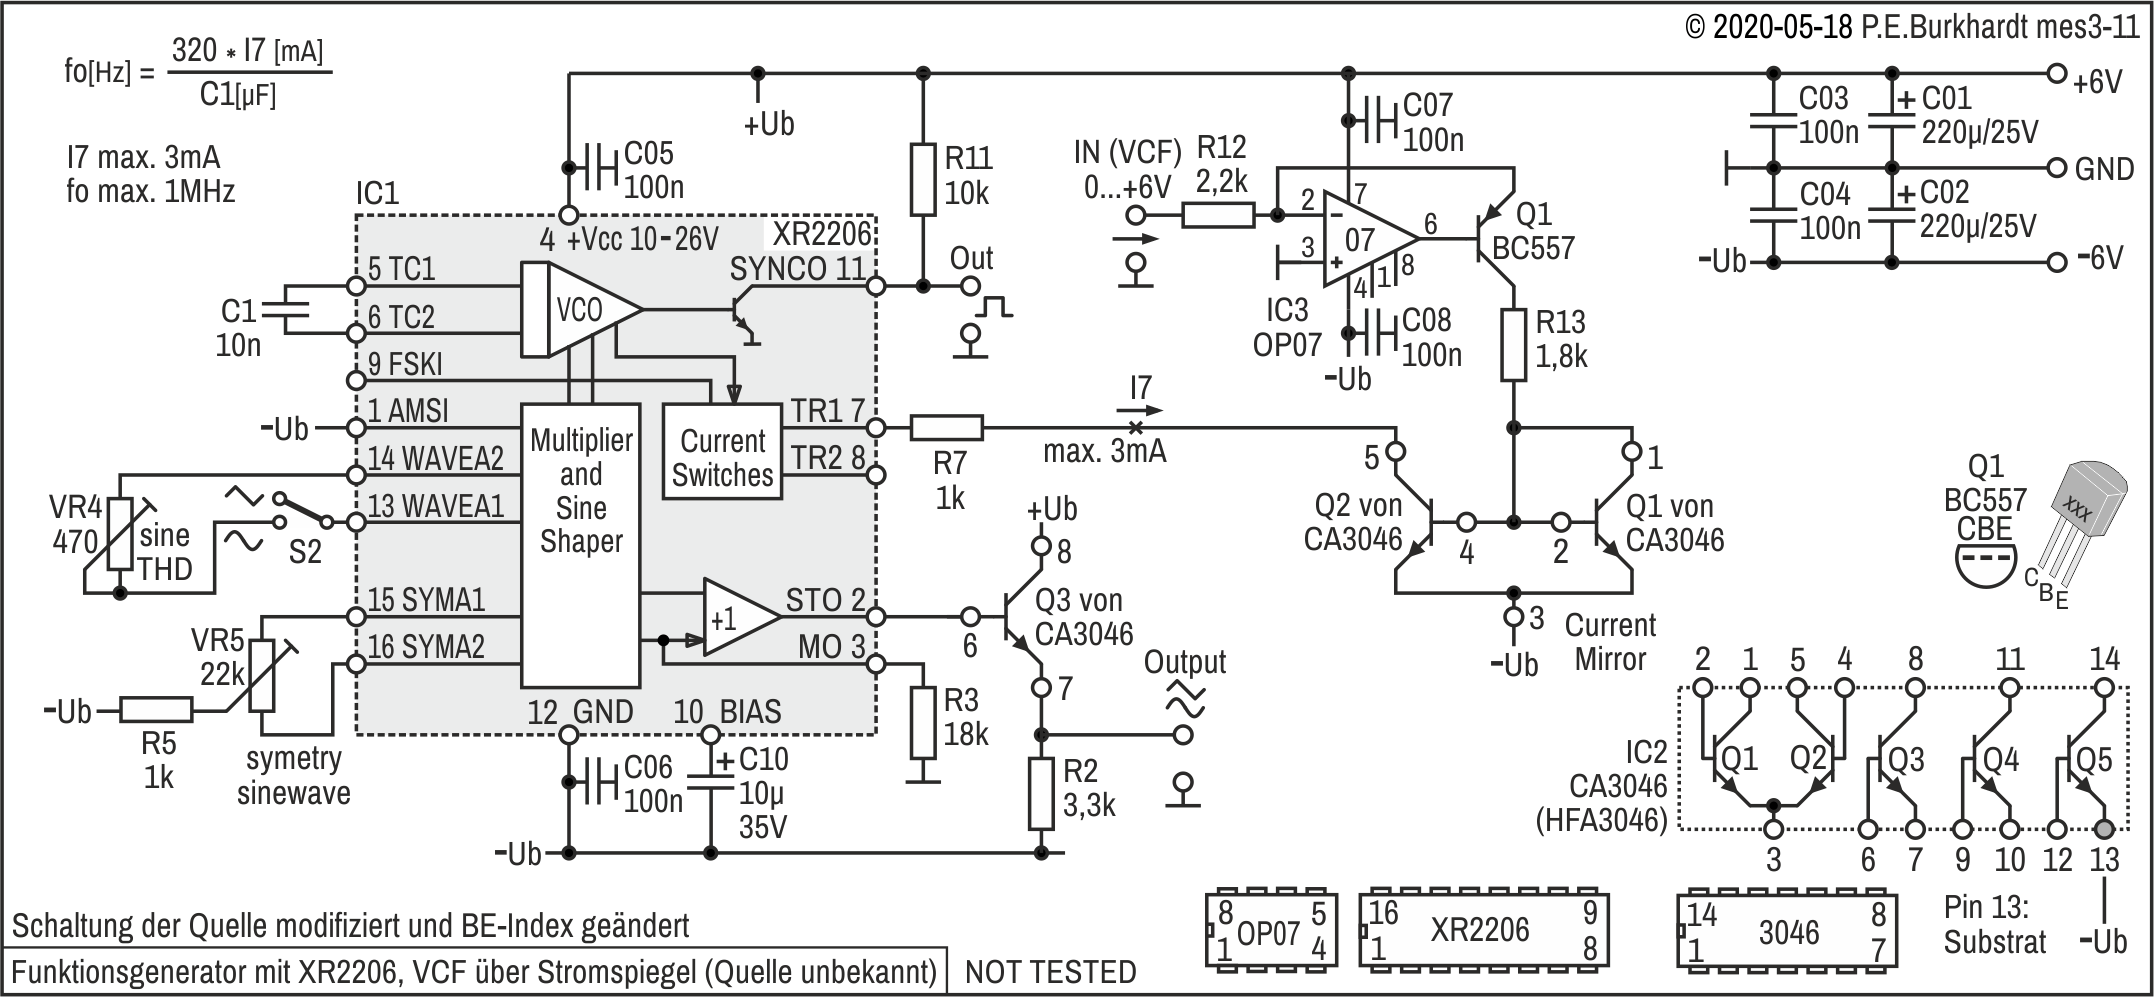 Funktionsgenerator XR2206 mit Current Mirror (CA3046)